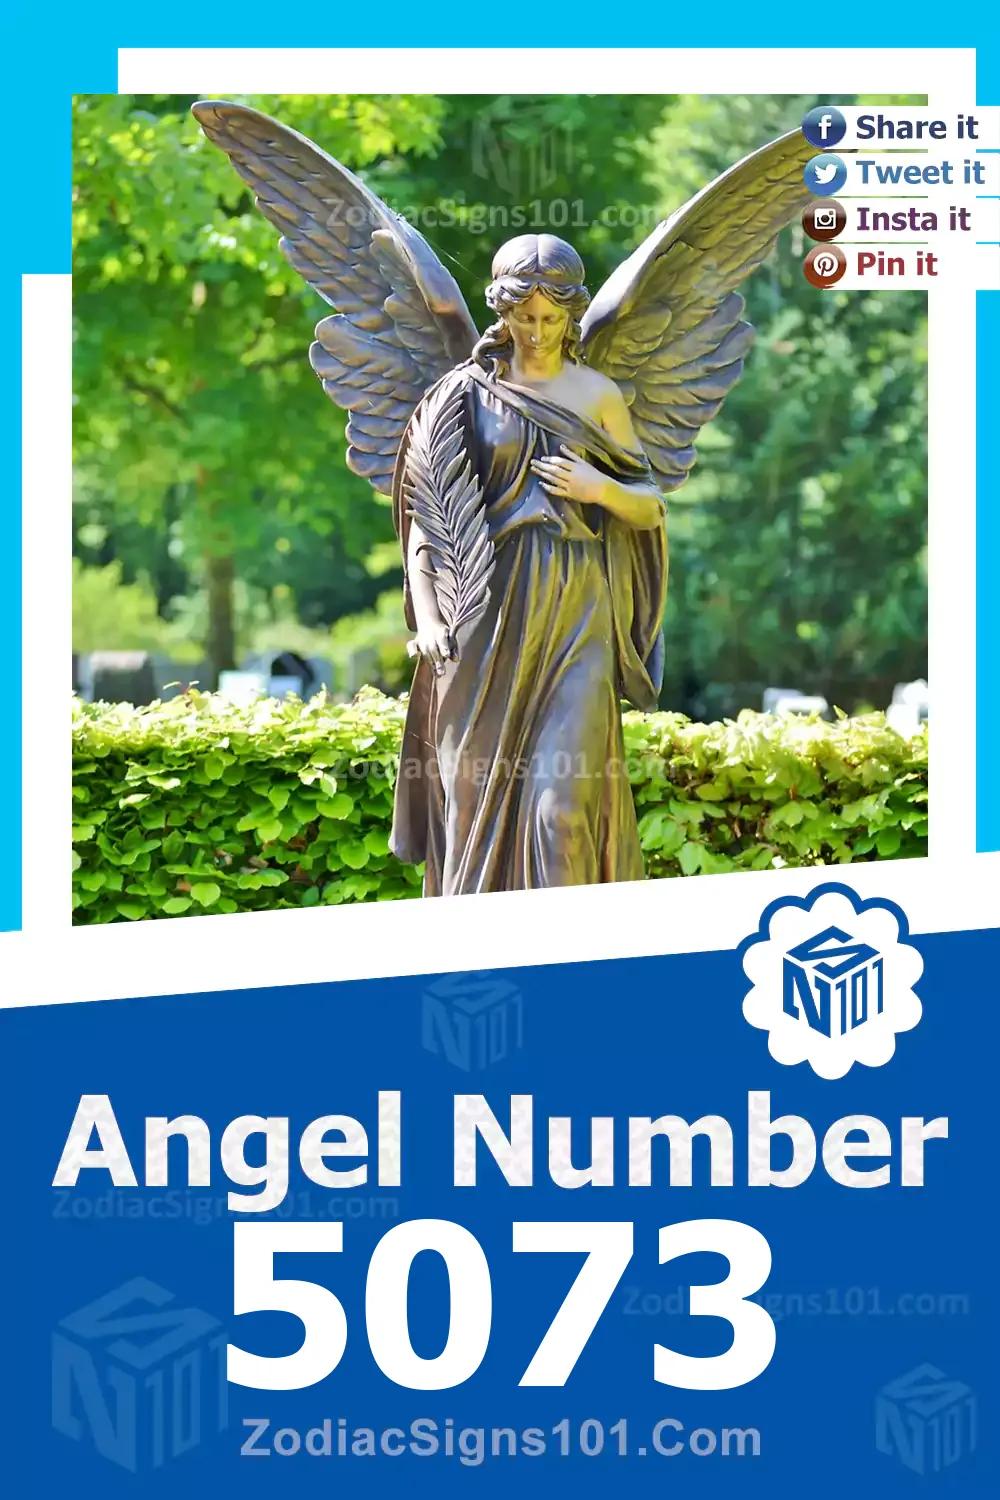 5073-Angel-Number-Meaning.jpg